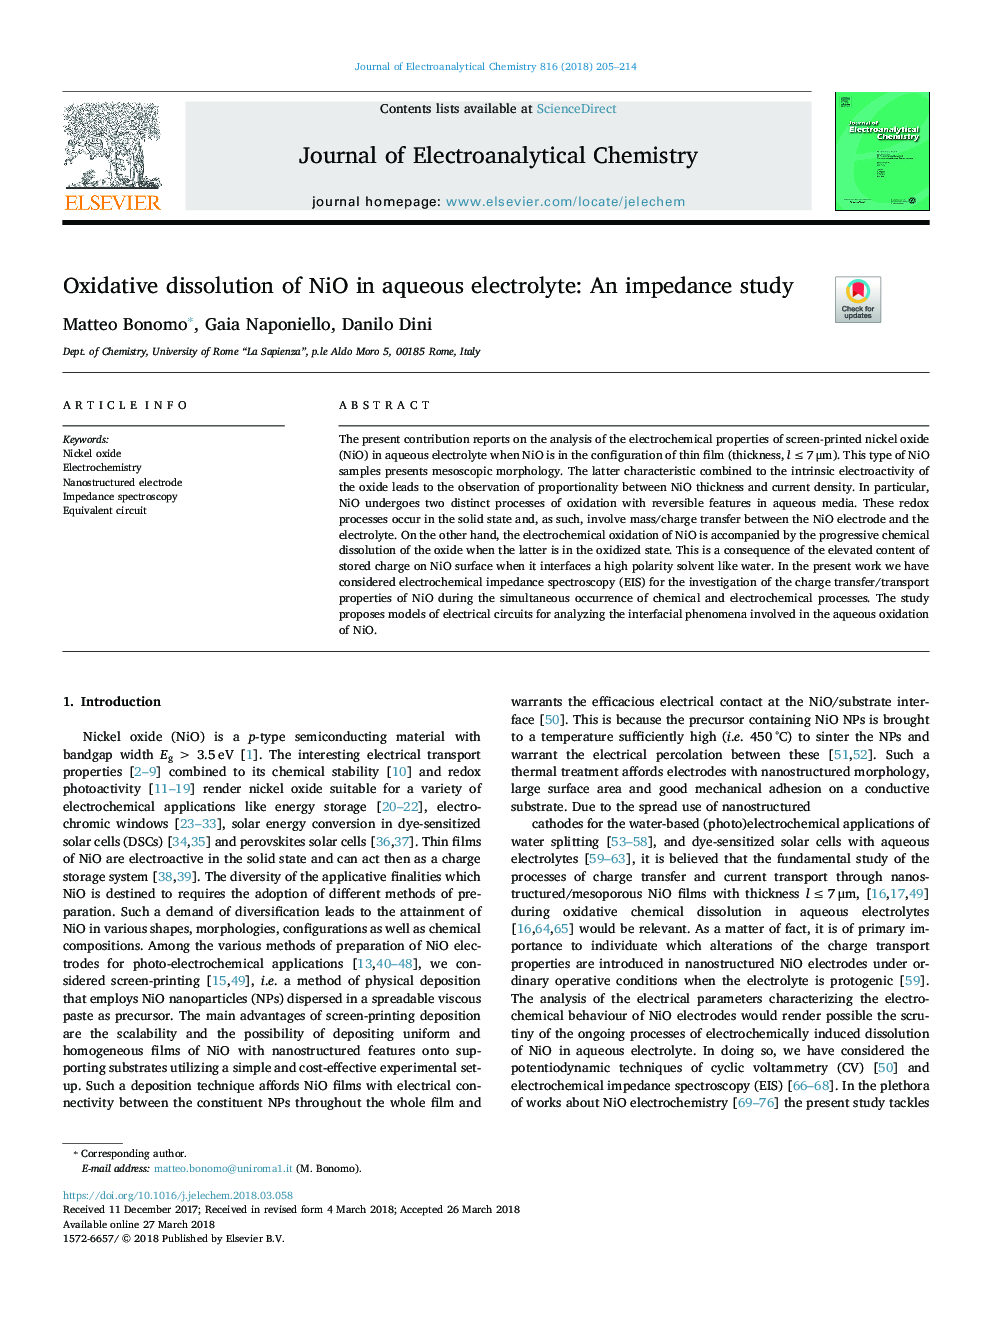 Oxidative dissolution of NiO in aqueous electrolyte: An impedance study